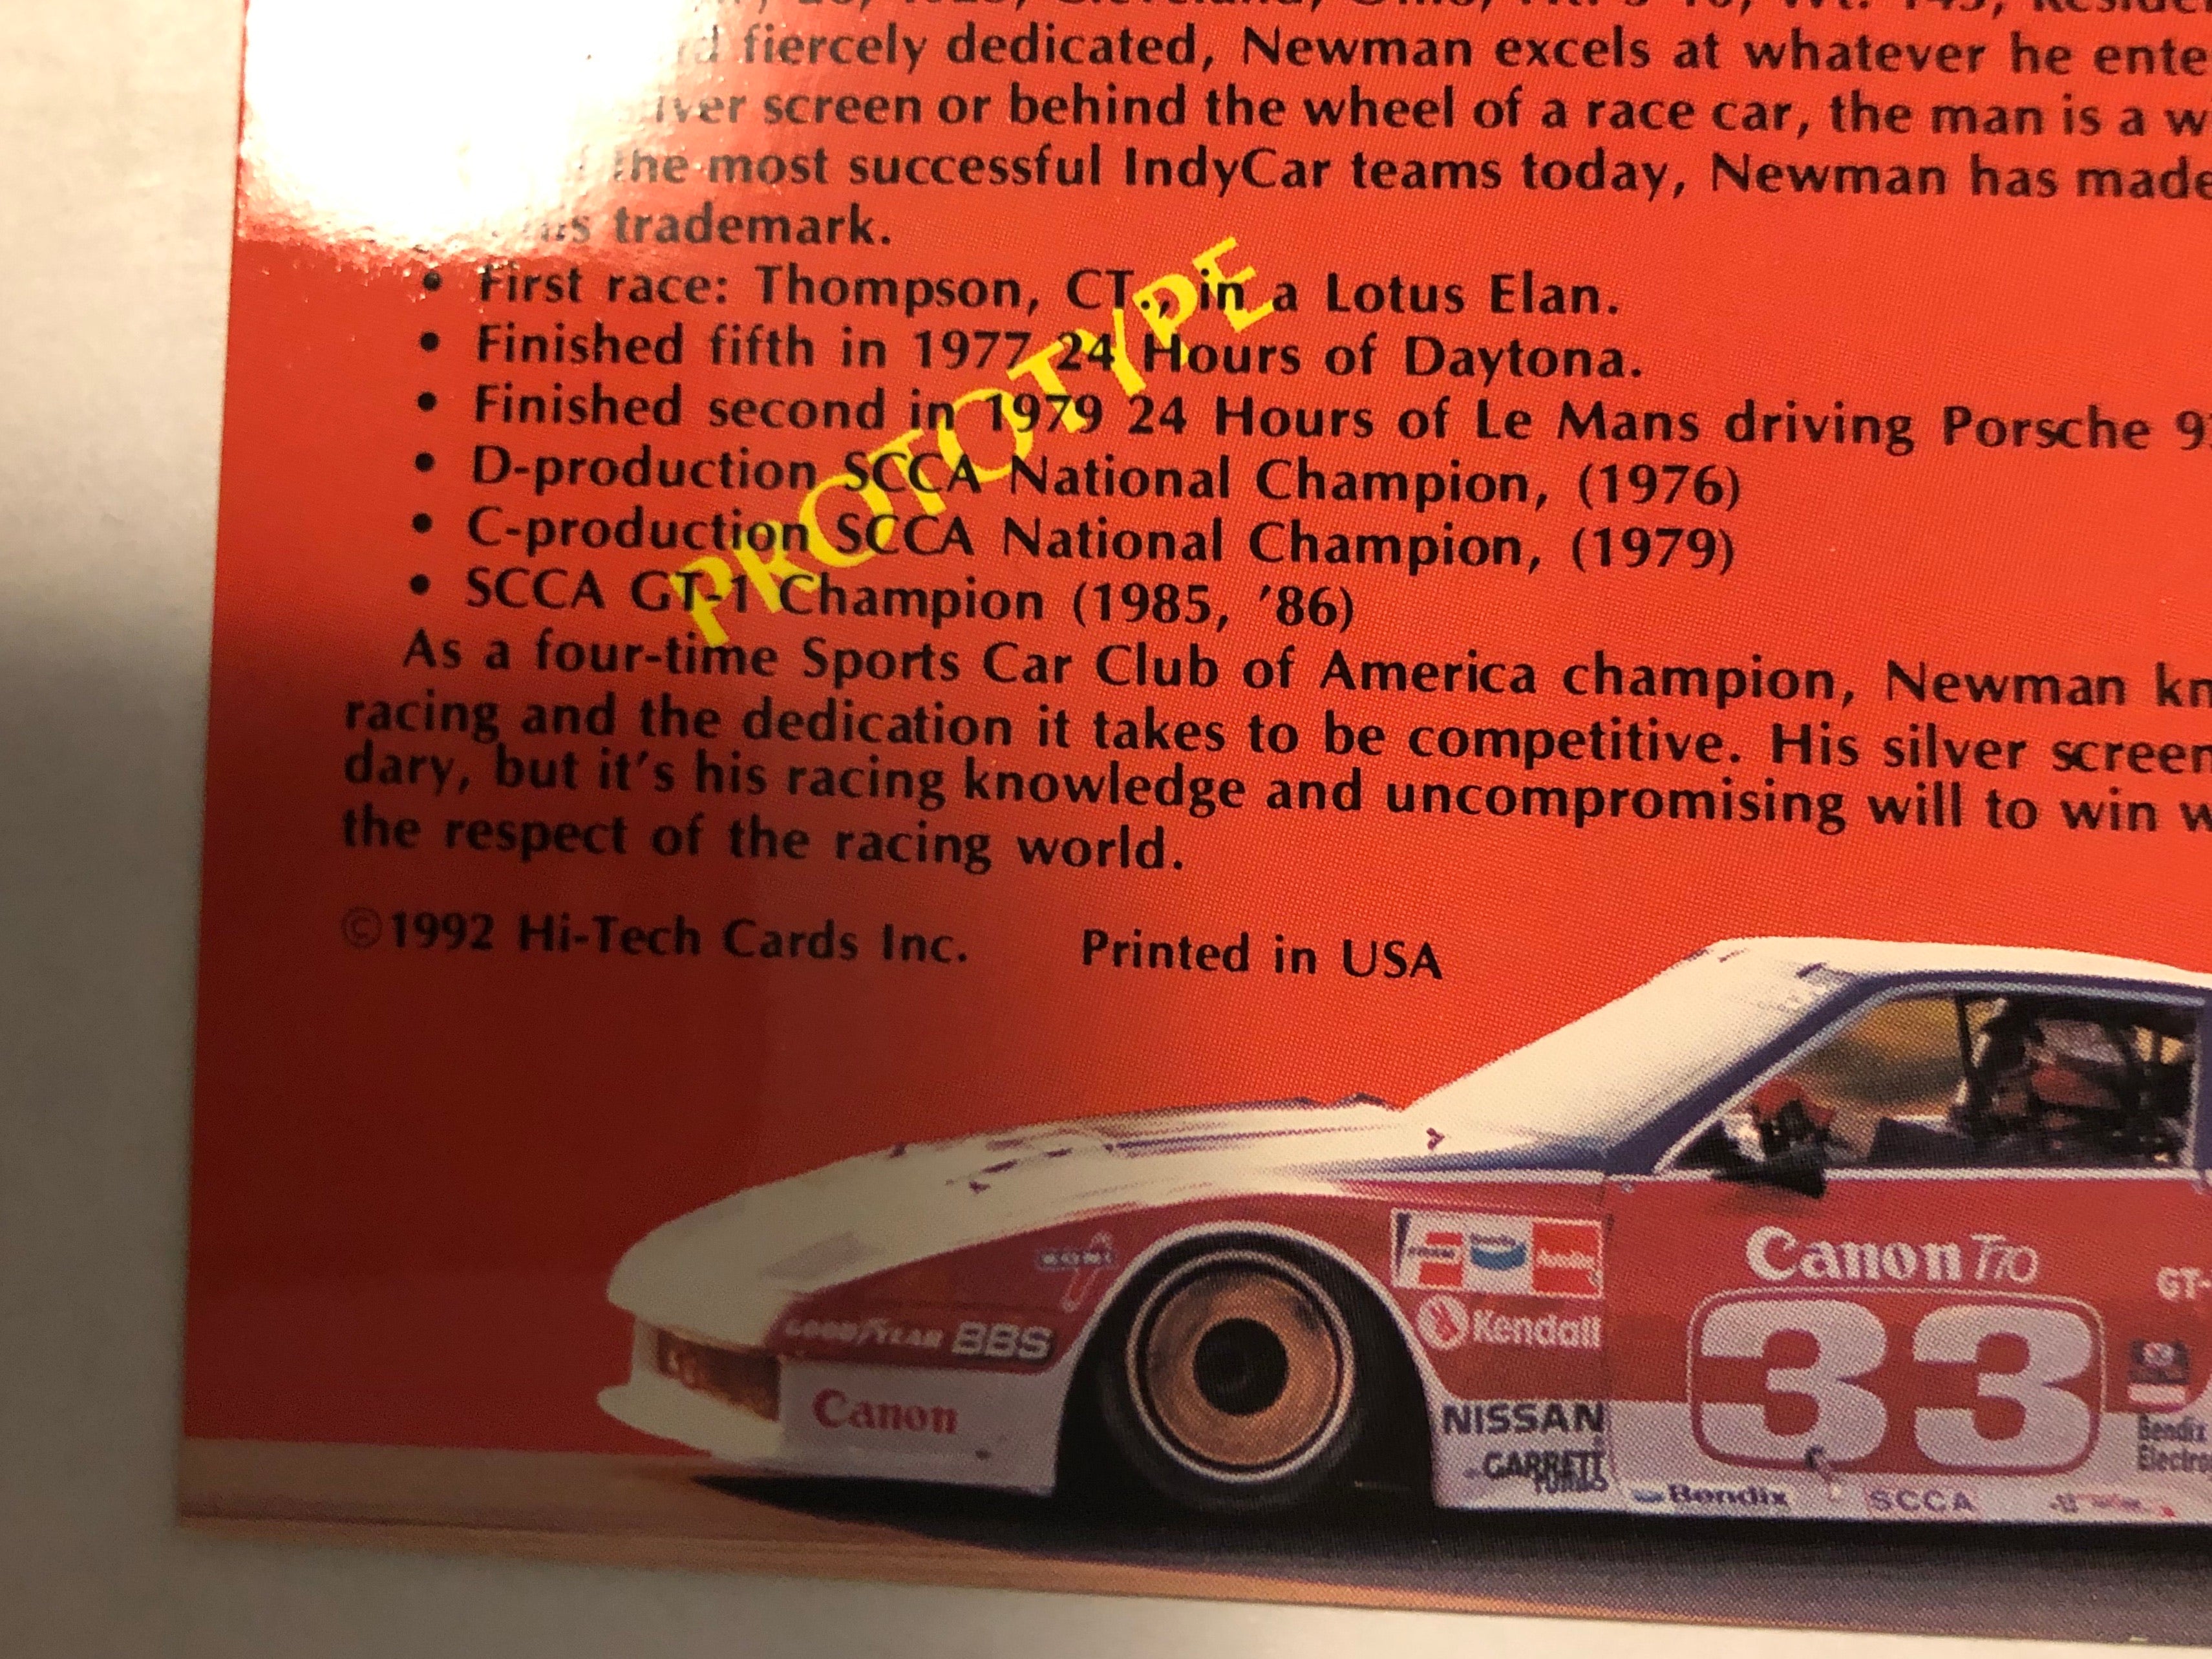 Paul Newman rare racing card promo 1990s